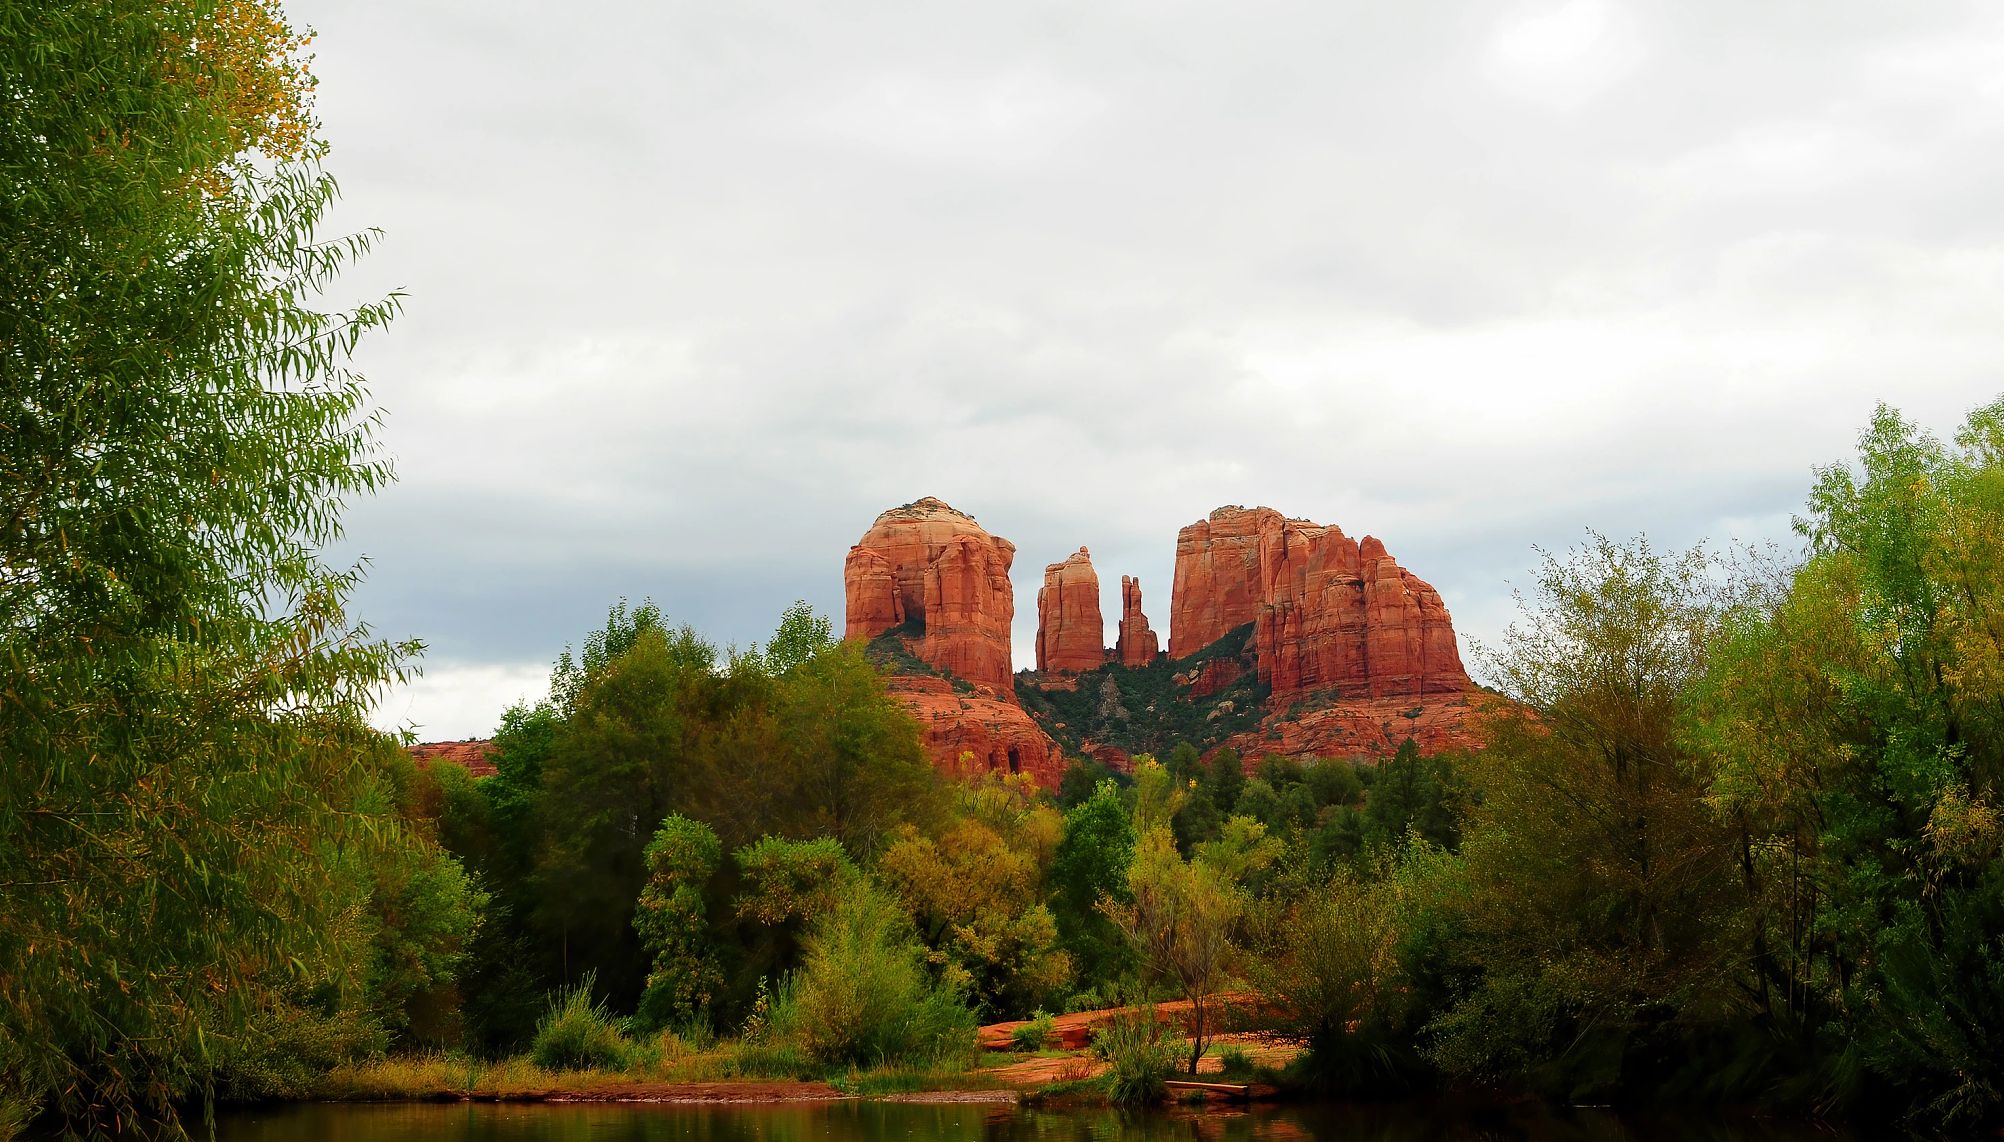 The red rocks in Sedona, Arizona